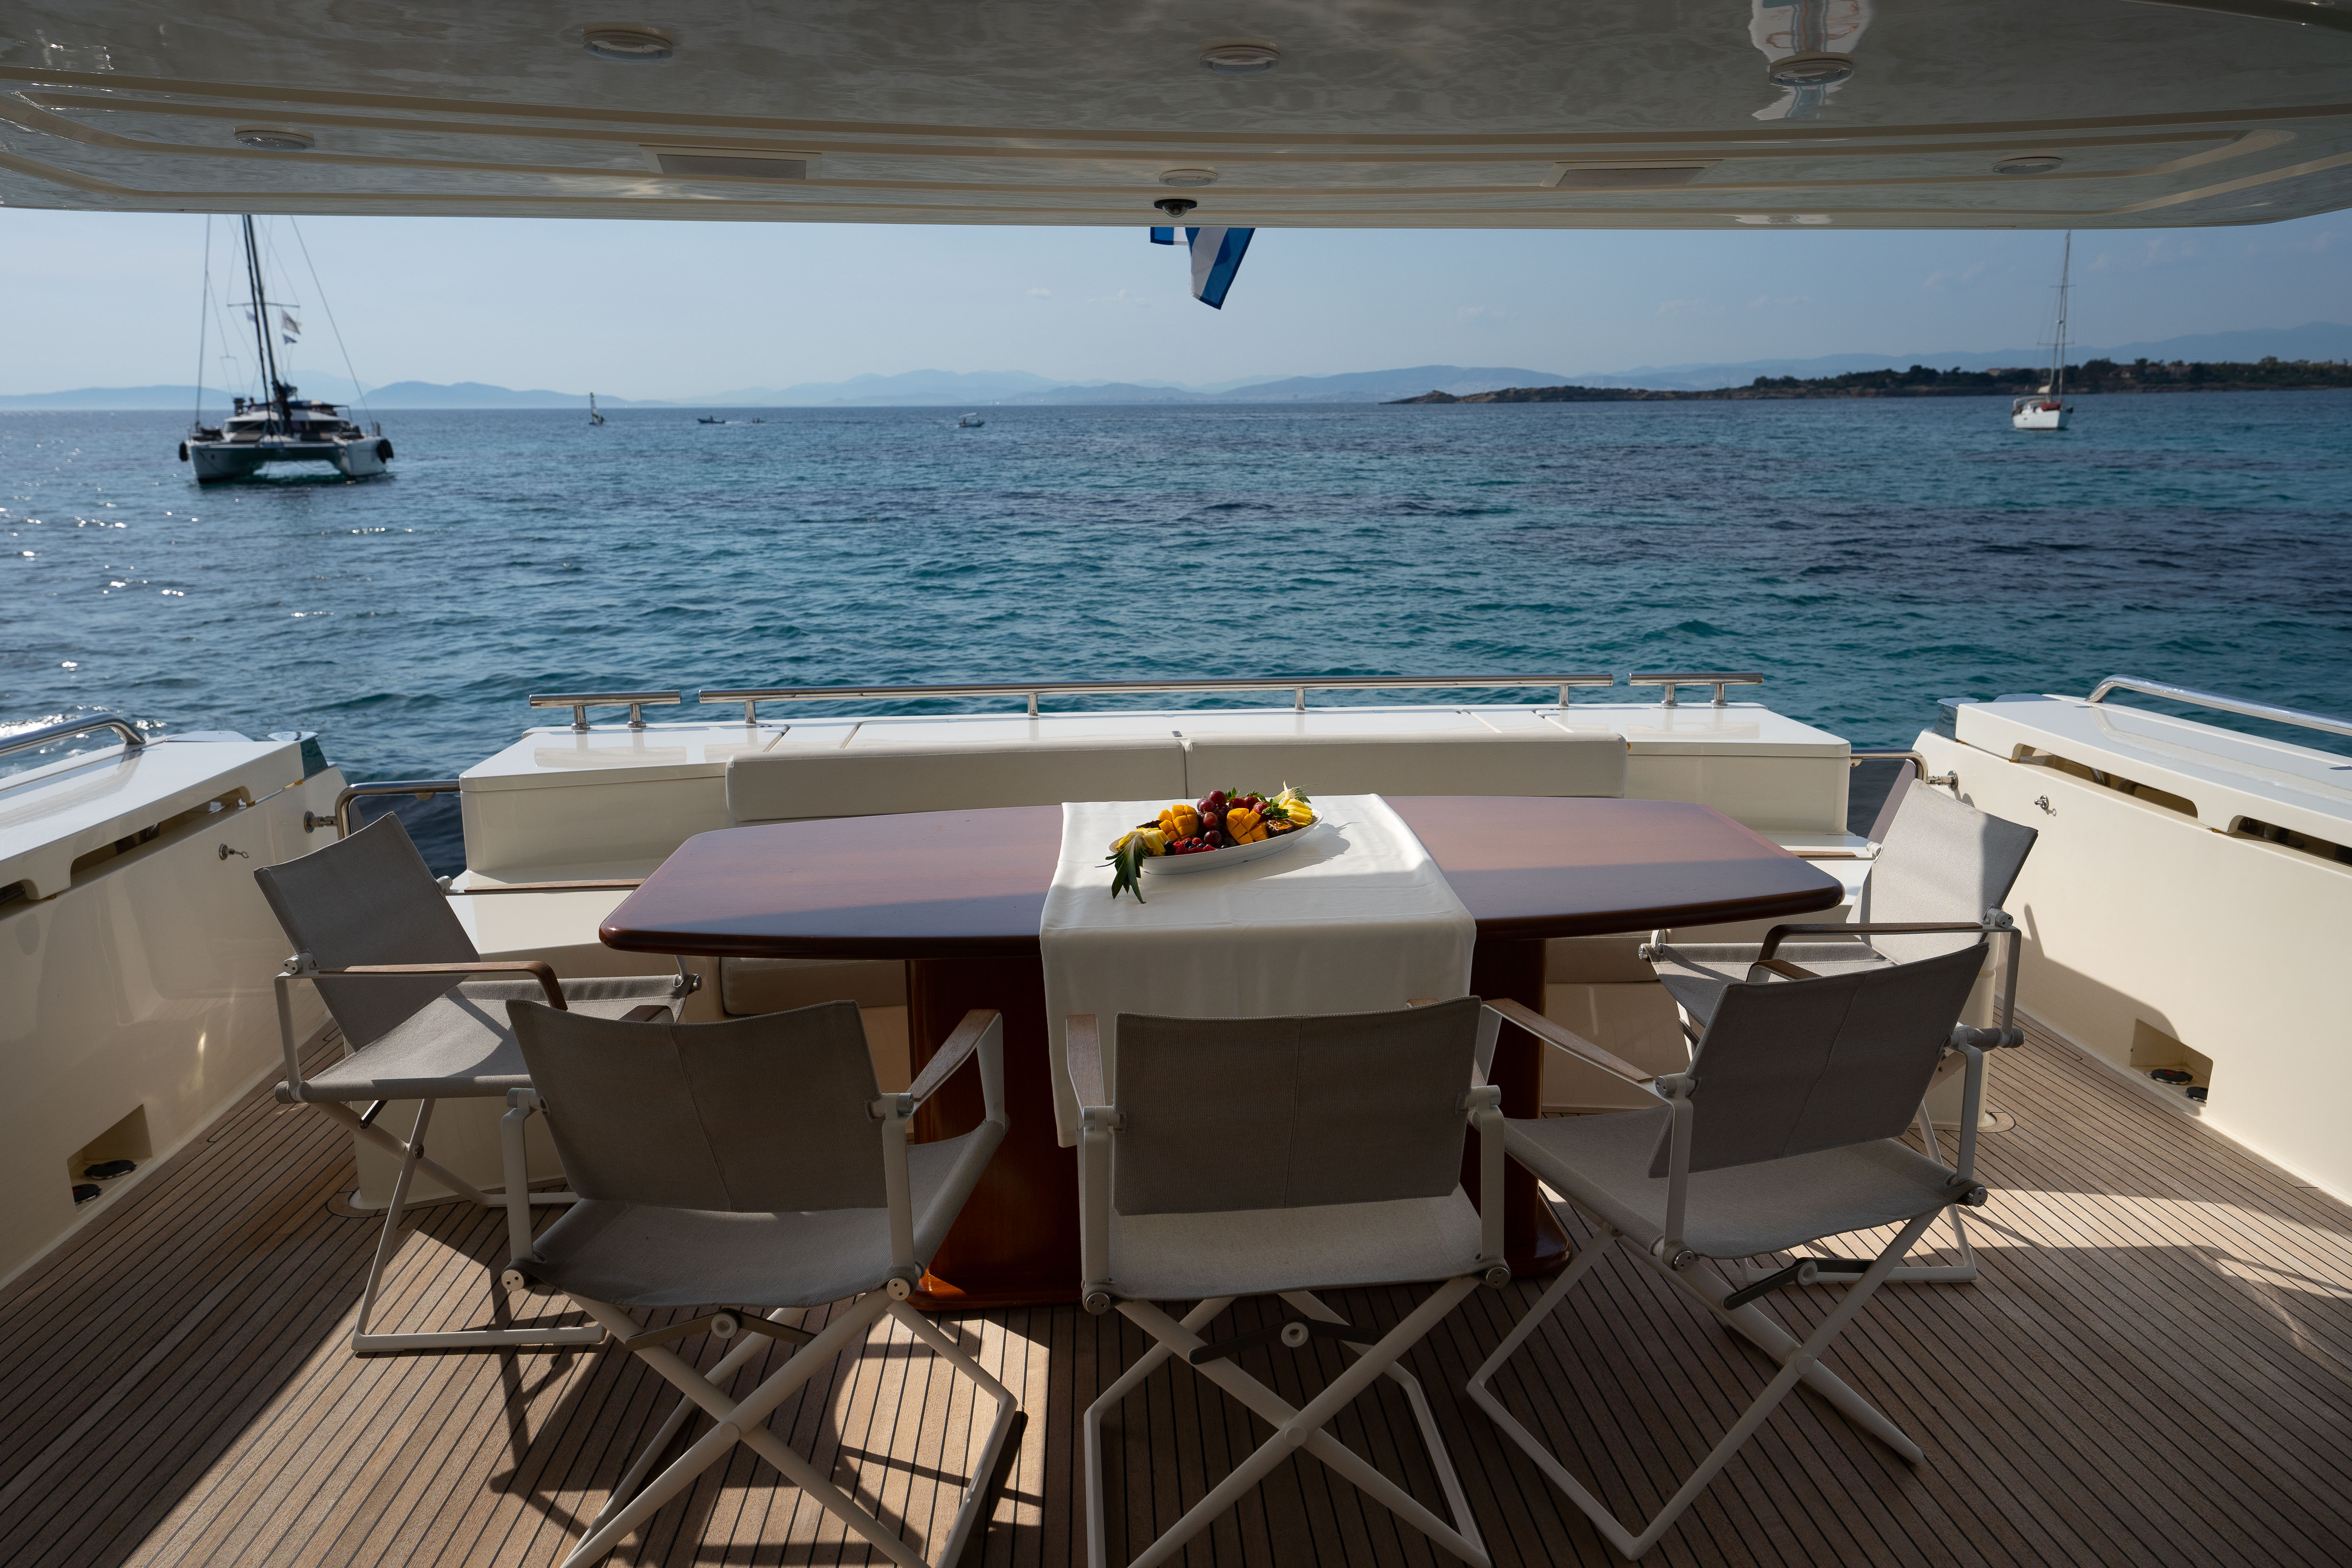 Ferretti 780 - Superyacht charter worldwide & Boat hire in Greece Athens and Saronic Gulf Athens Hellinikon Agios Kosmas Marina 5